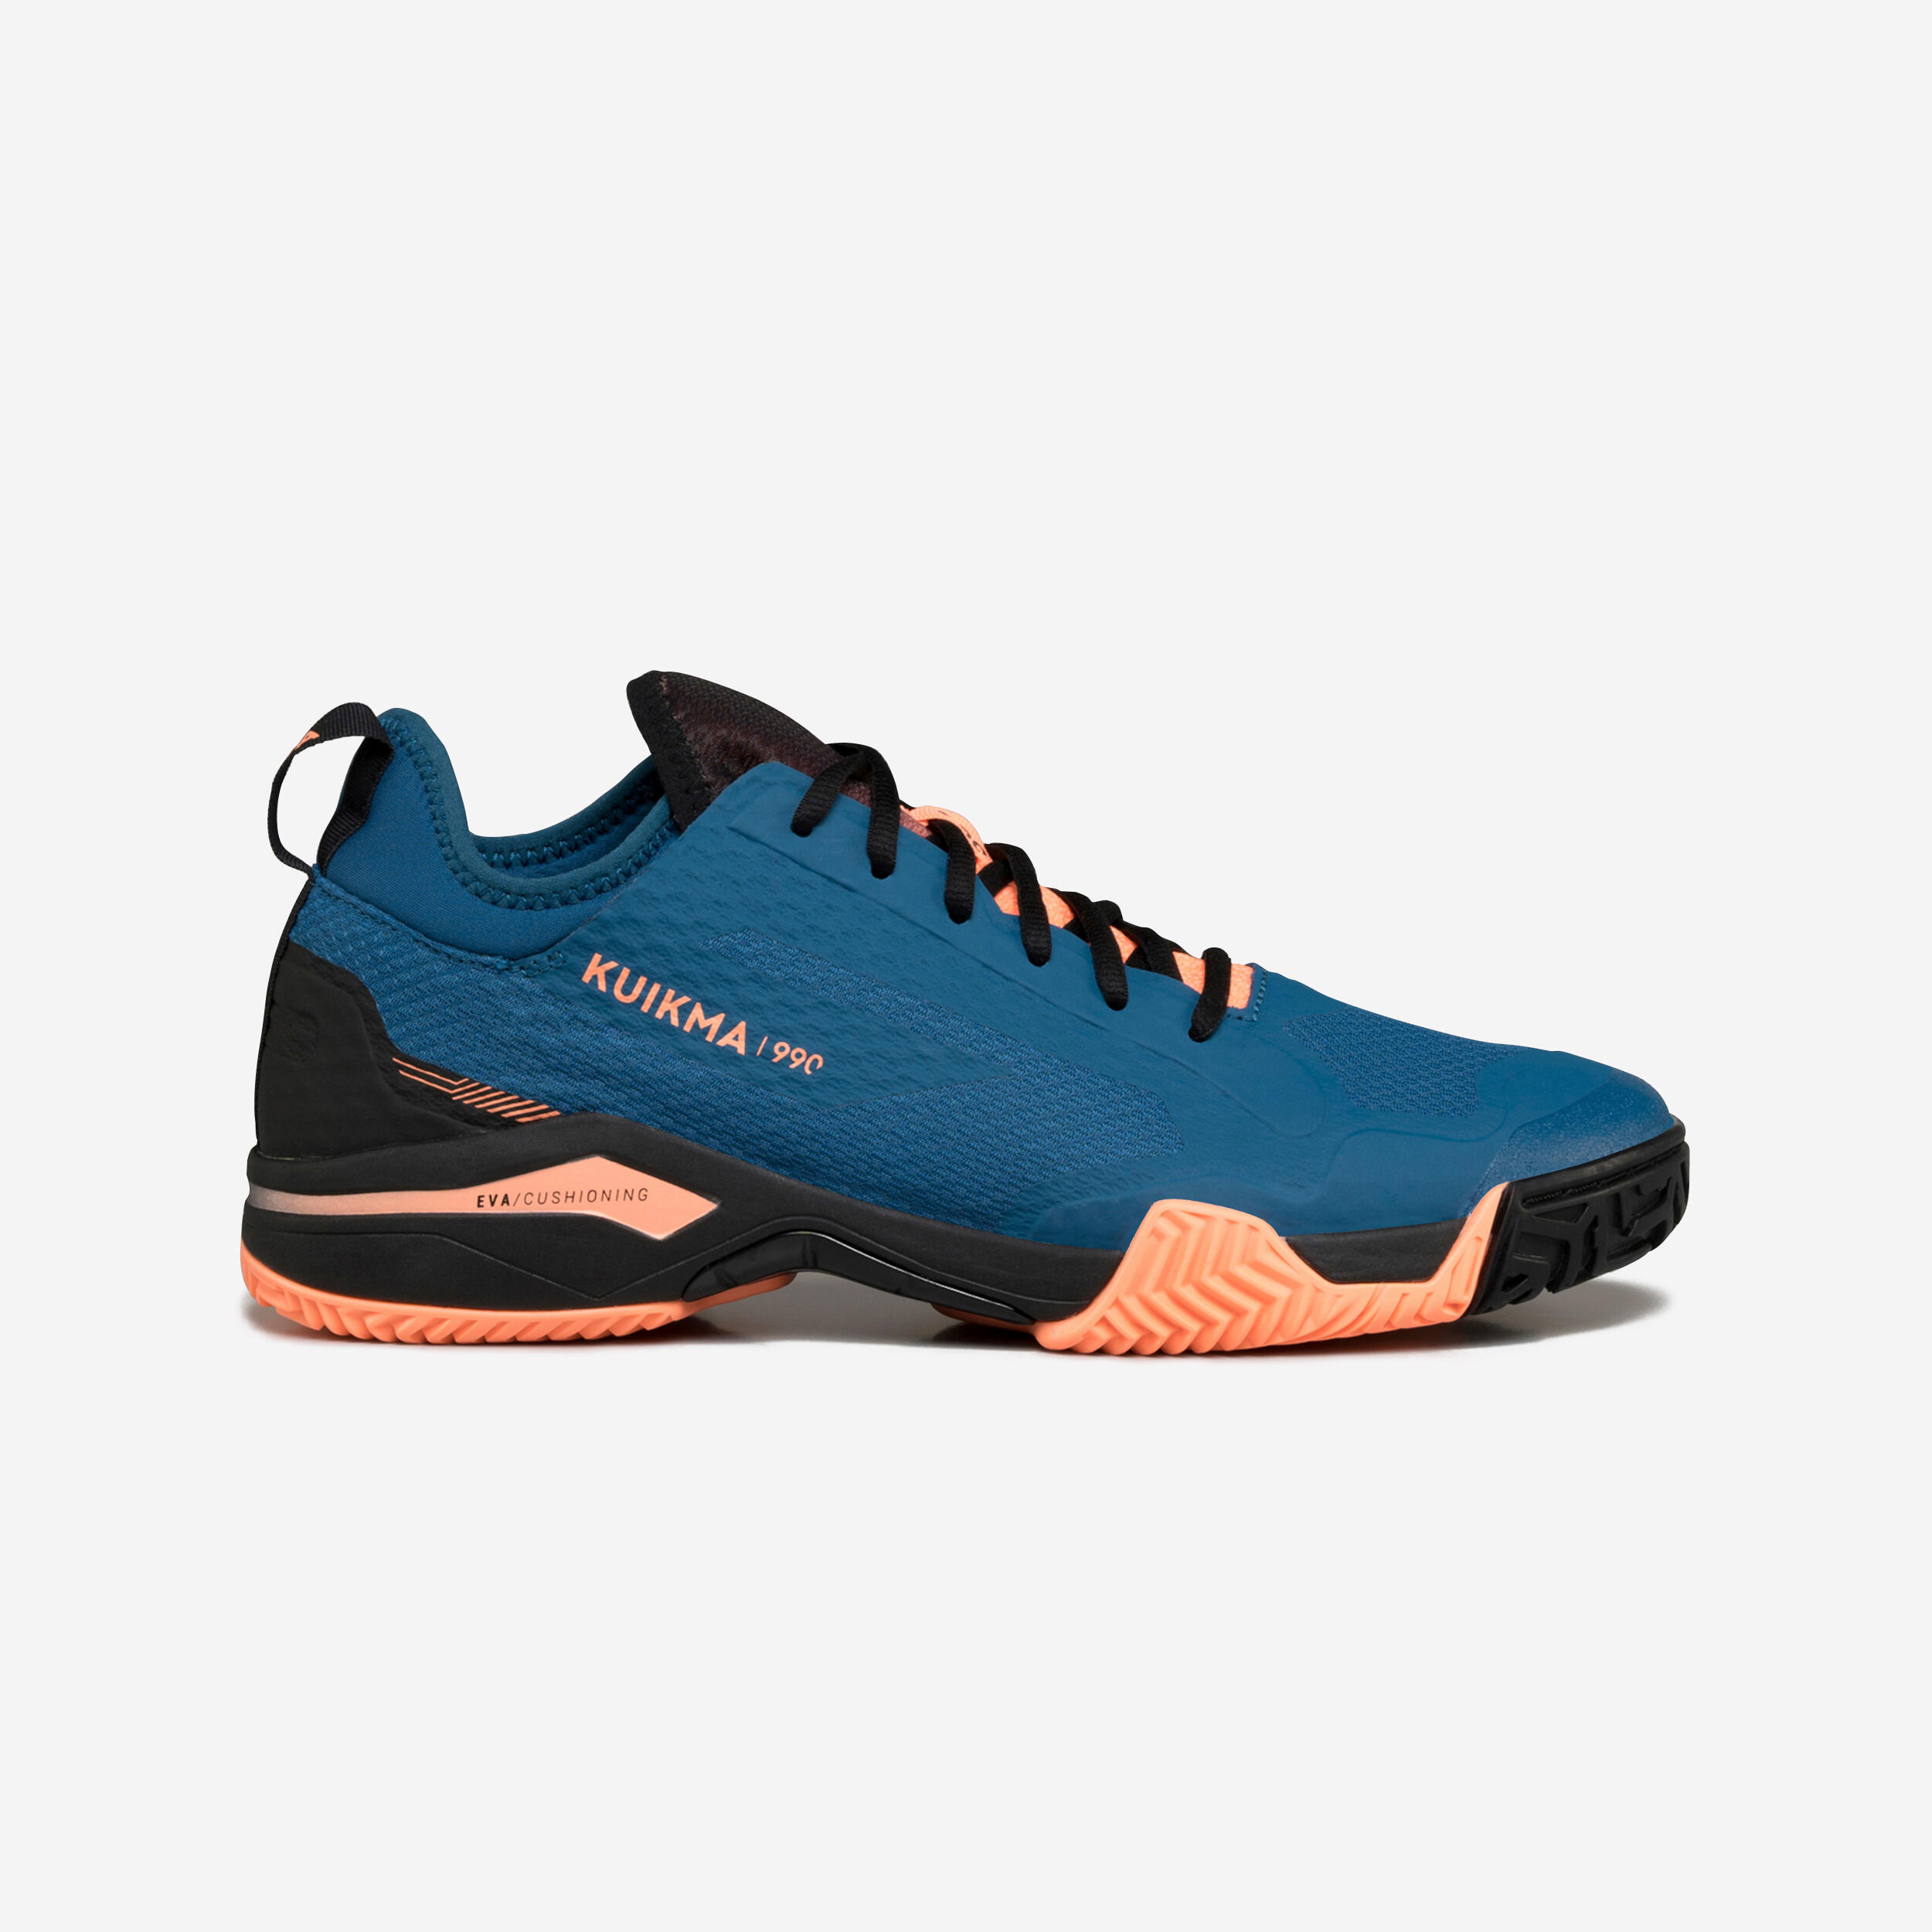 Men's Padel Shoes PS 990 Dynamic - Blue/Orange 1/7